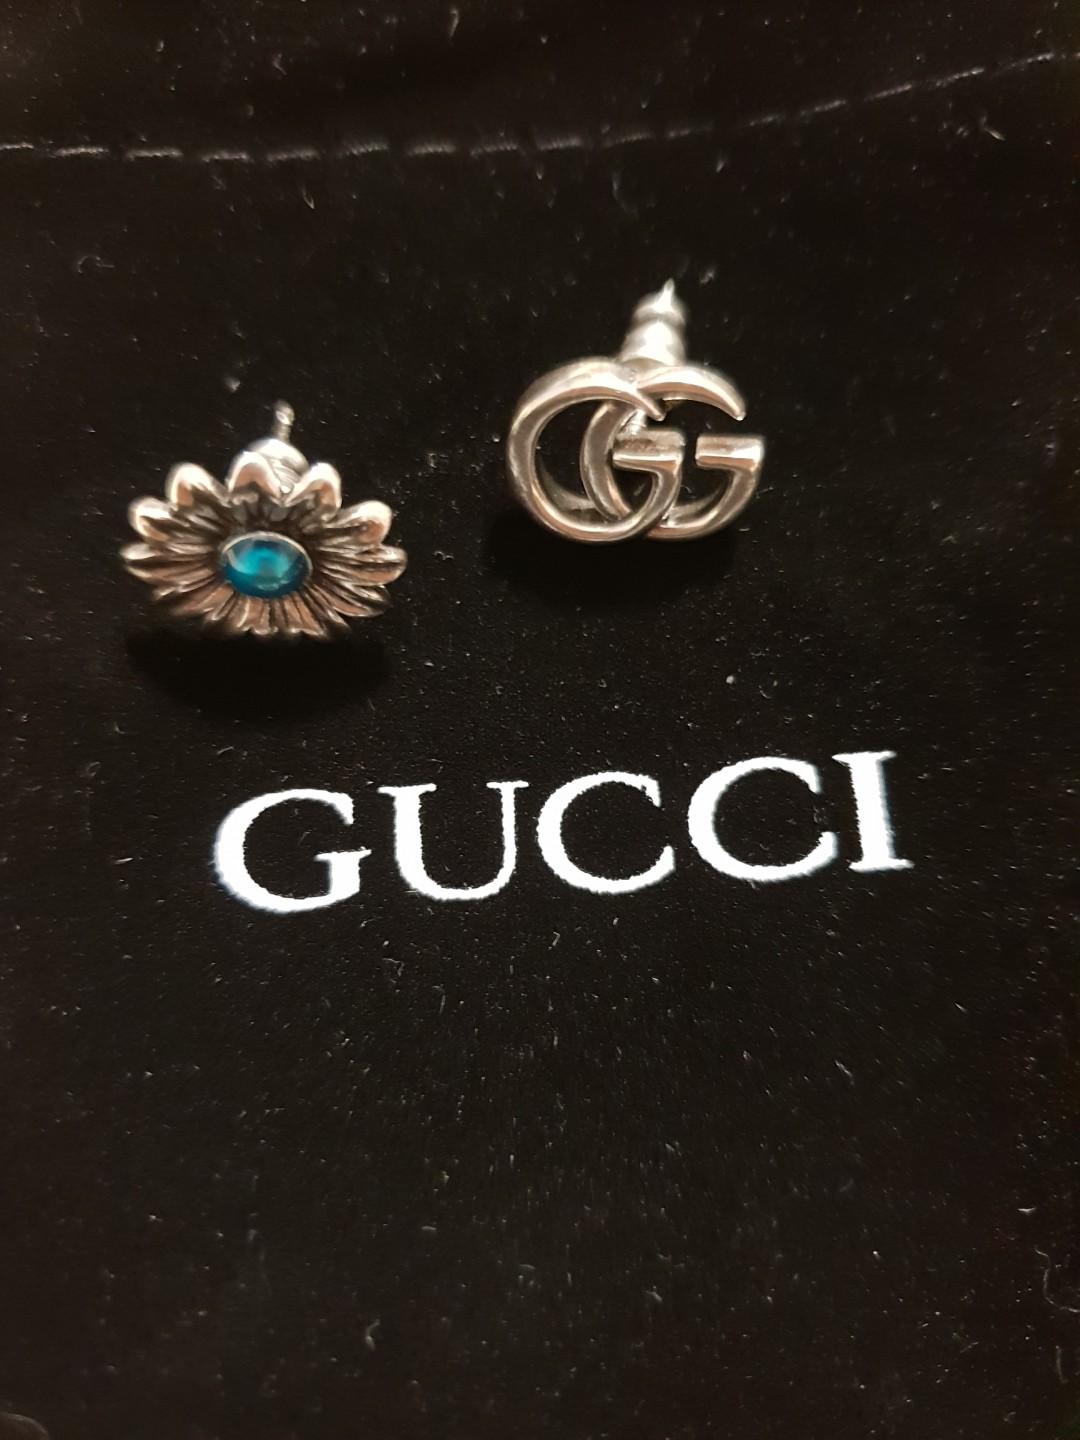 used gucci earrings